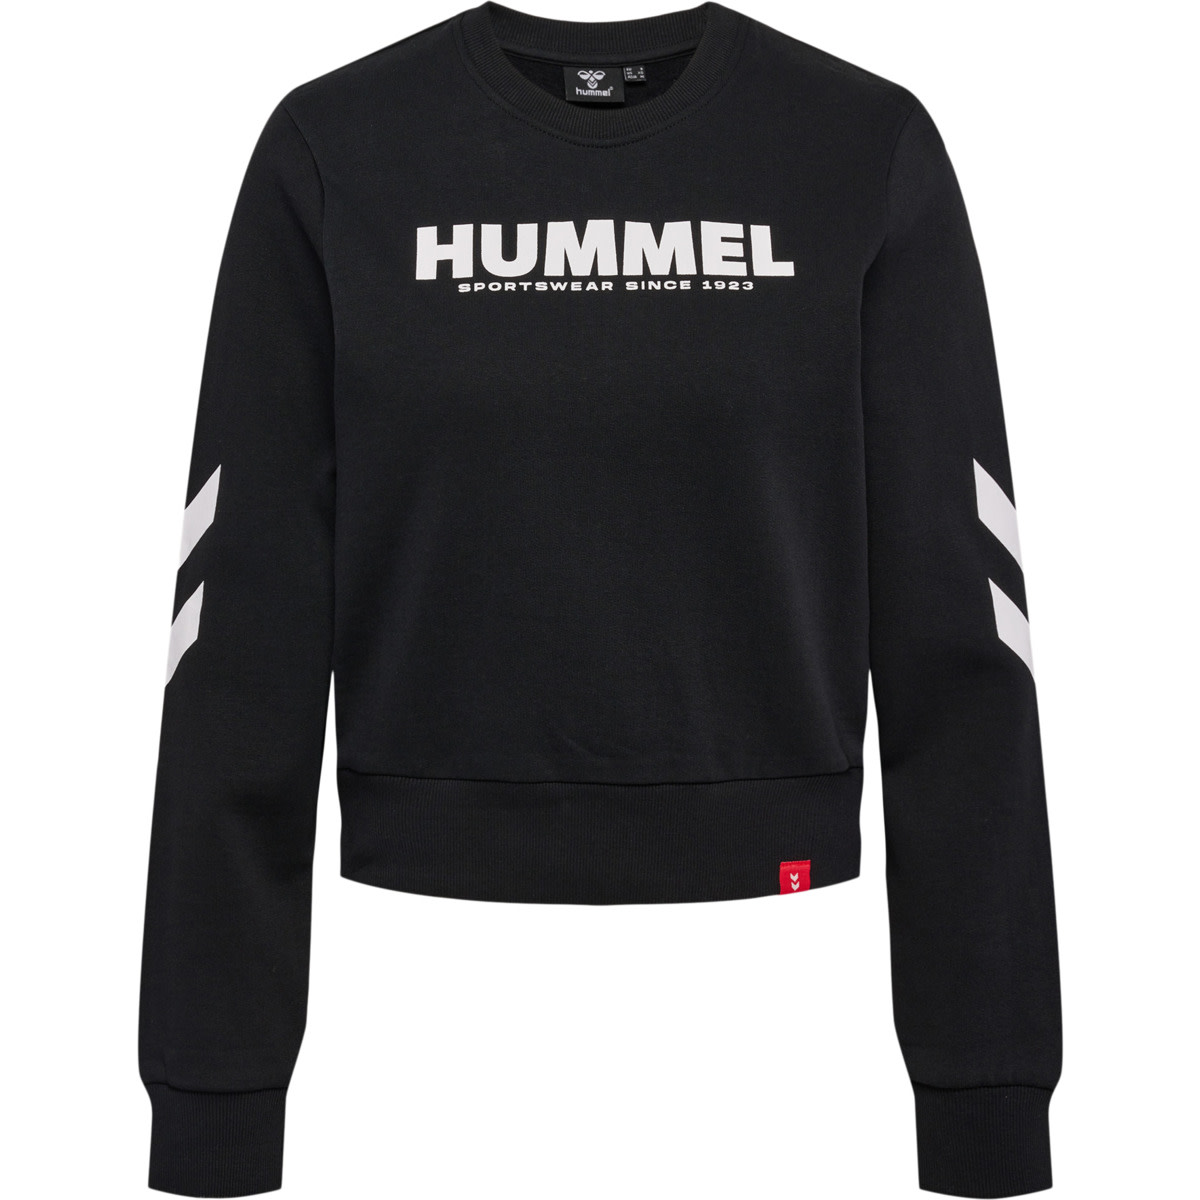 Hummel Women’s hmlLEGACY Sweatshirt Black